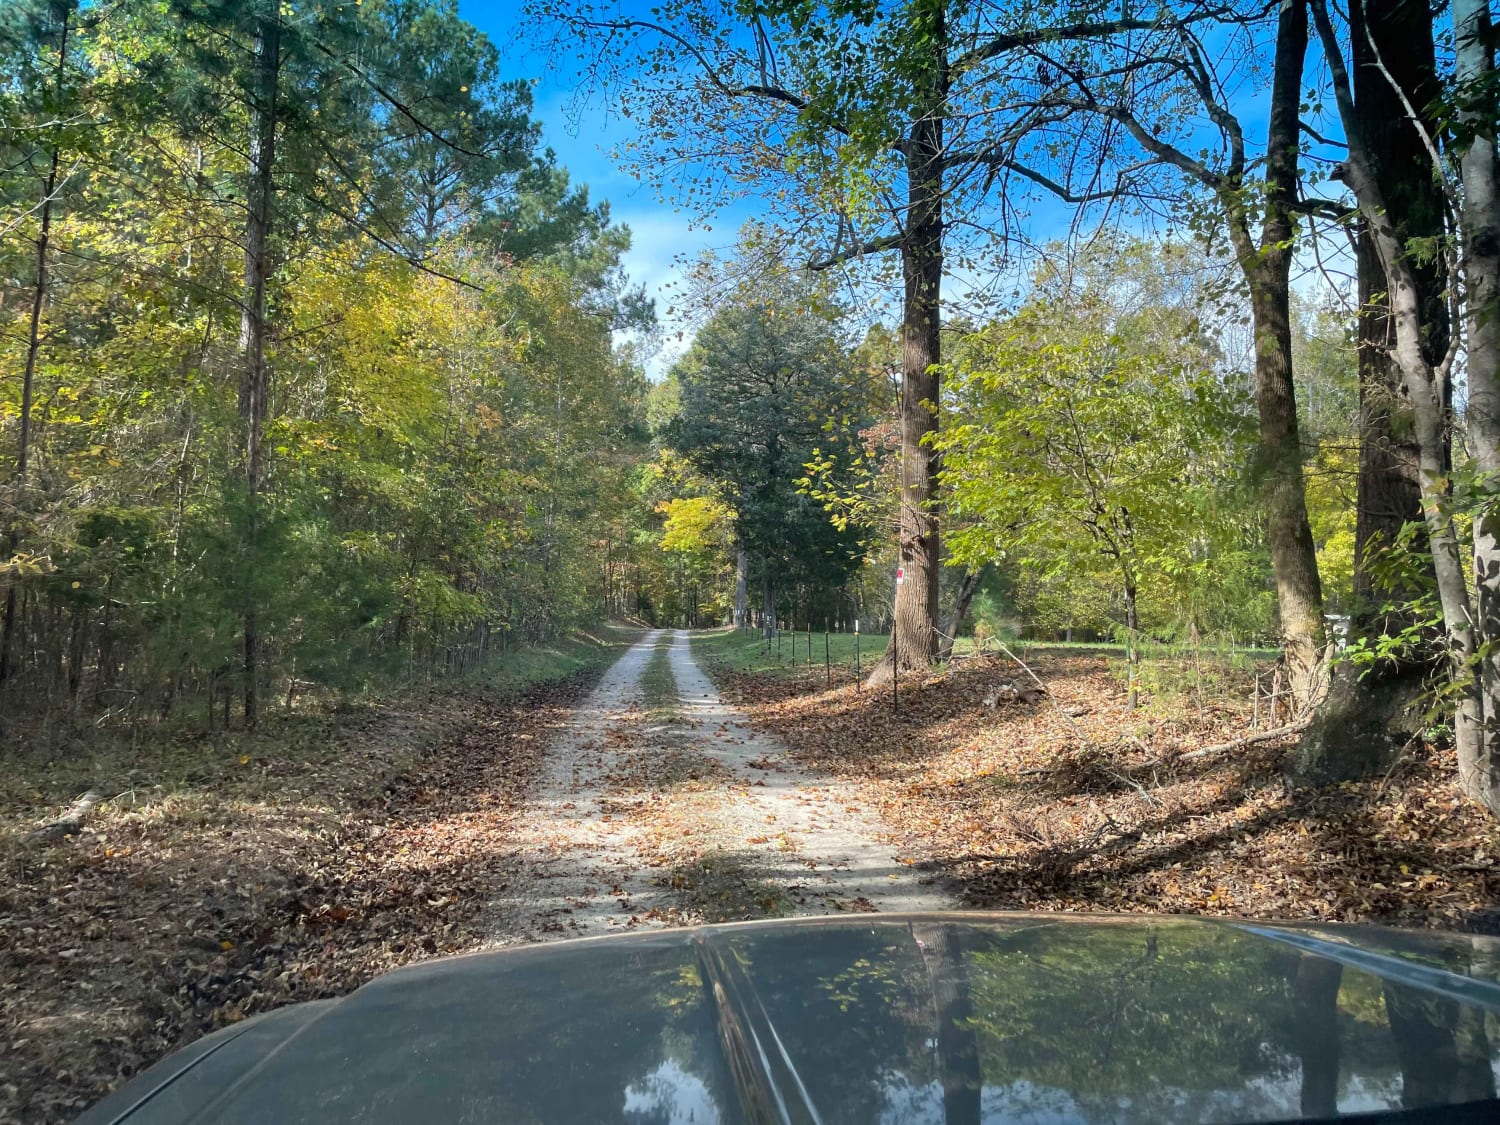 South Carolina Adventure Route Segment 4